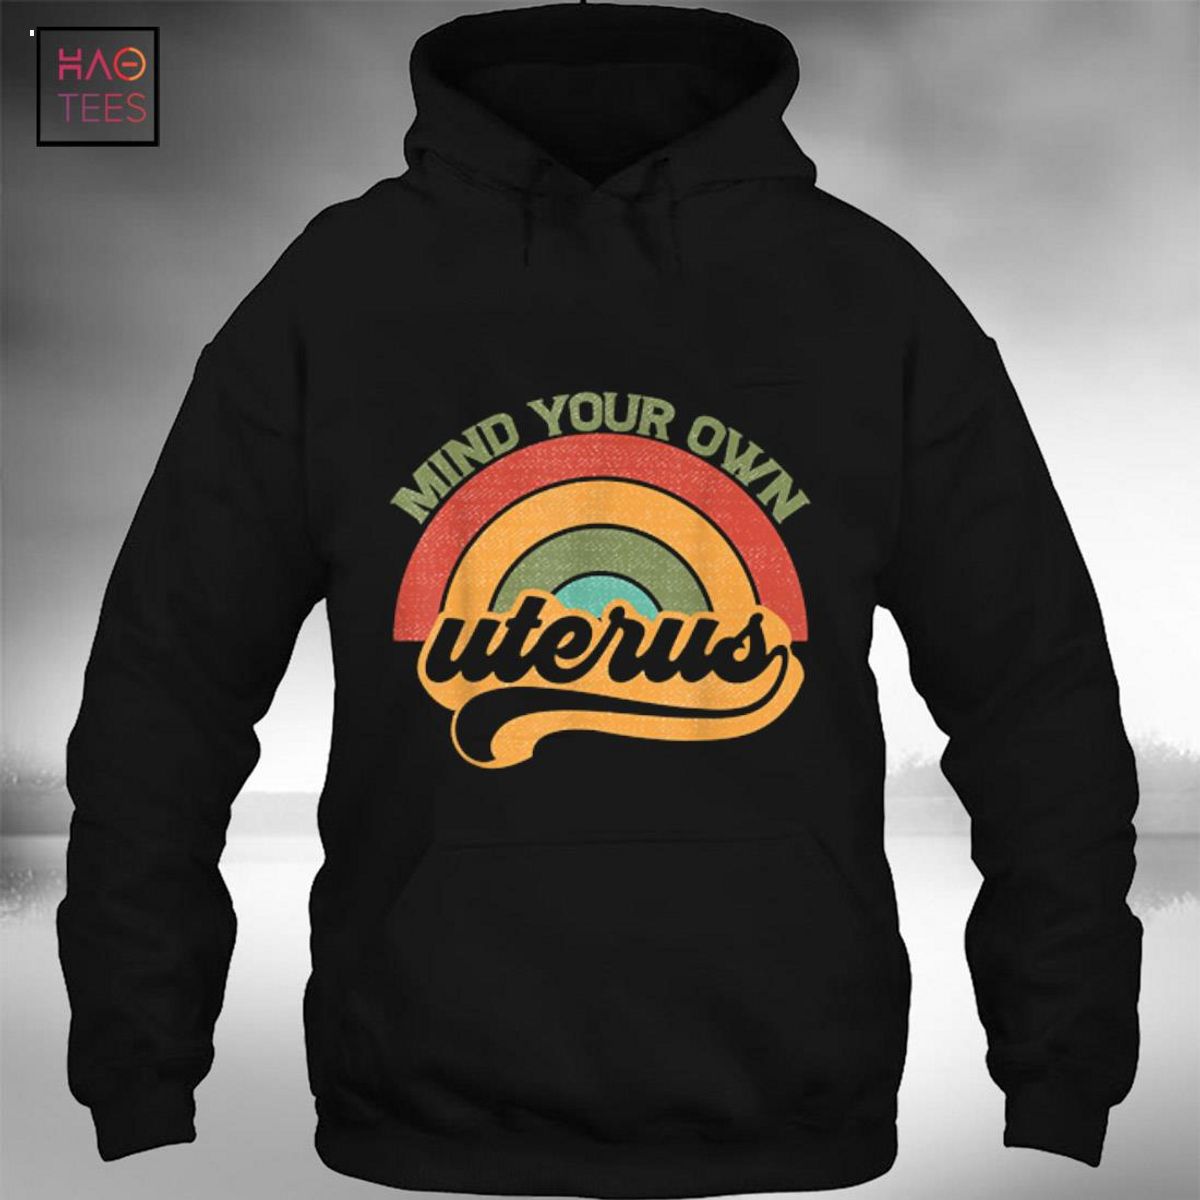 Mind Your Own Uterus Pro Choice Feminist Women's Rights Shirt